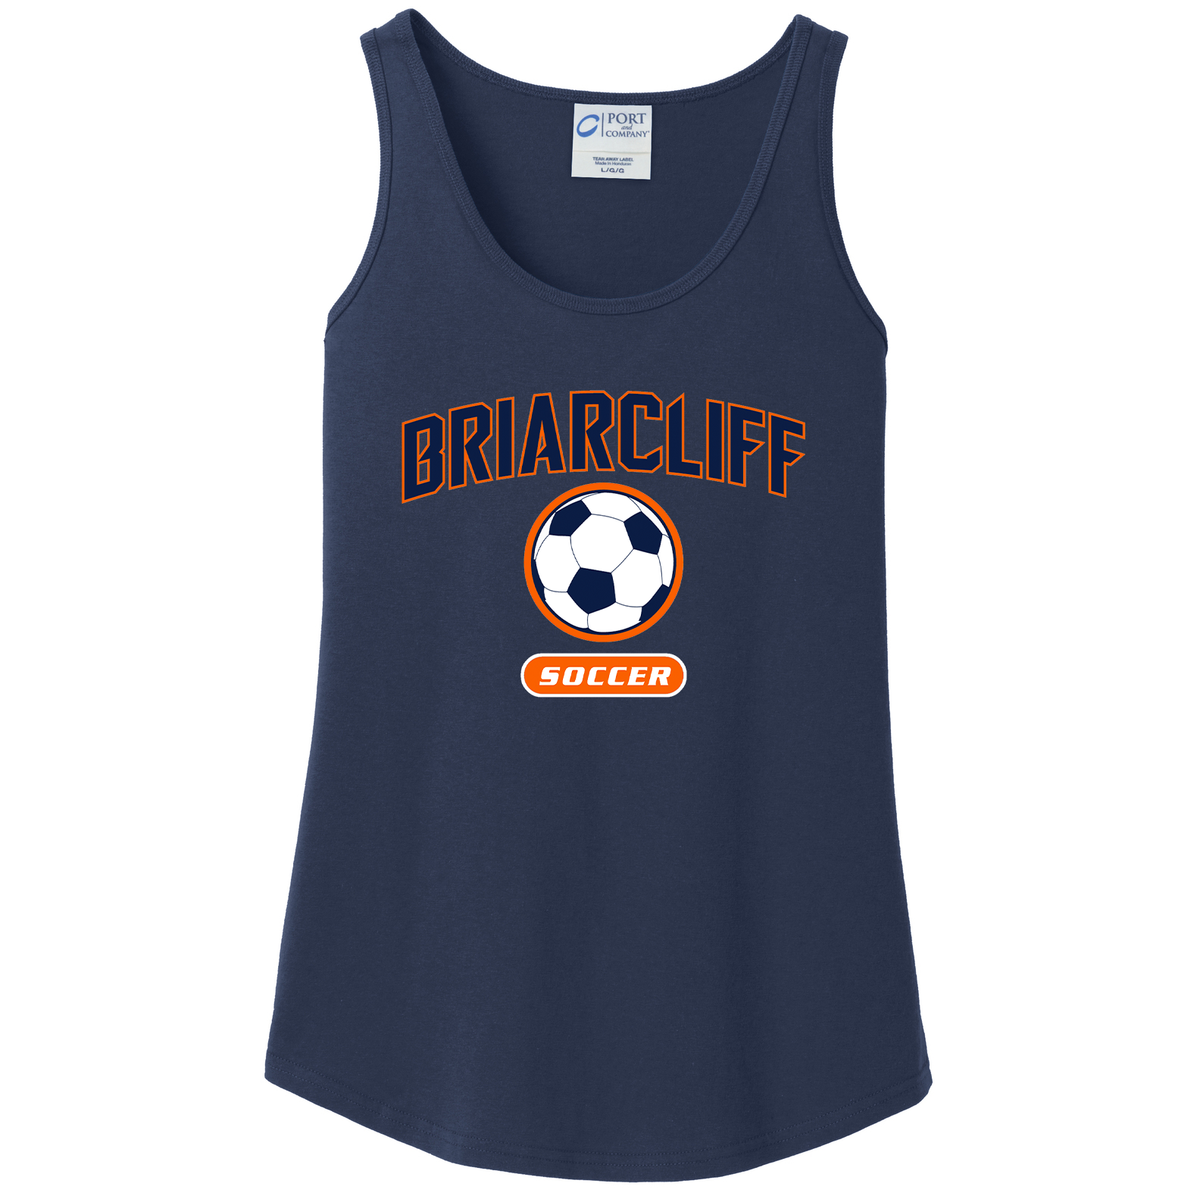 Briarcliff Soccer Women's Tank Top